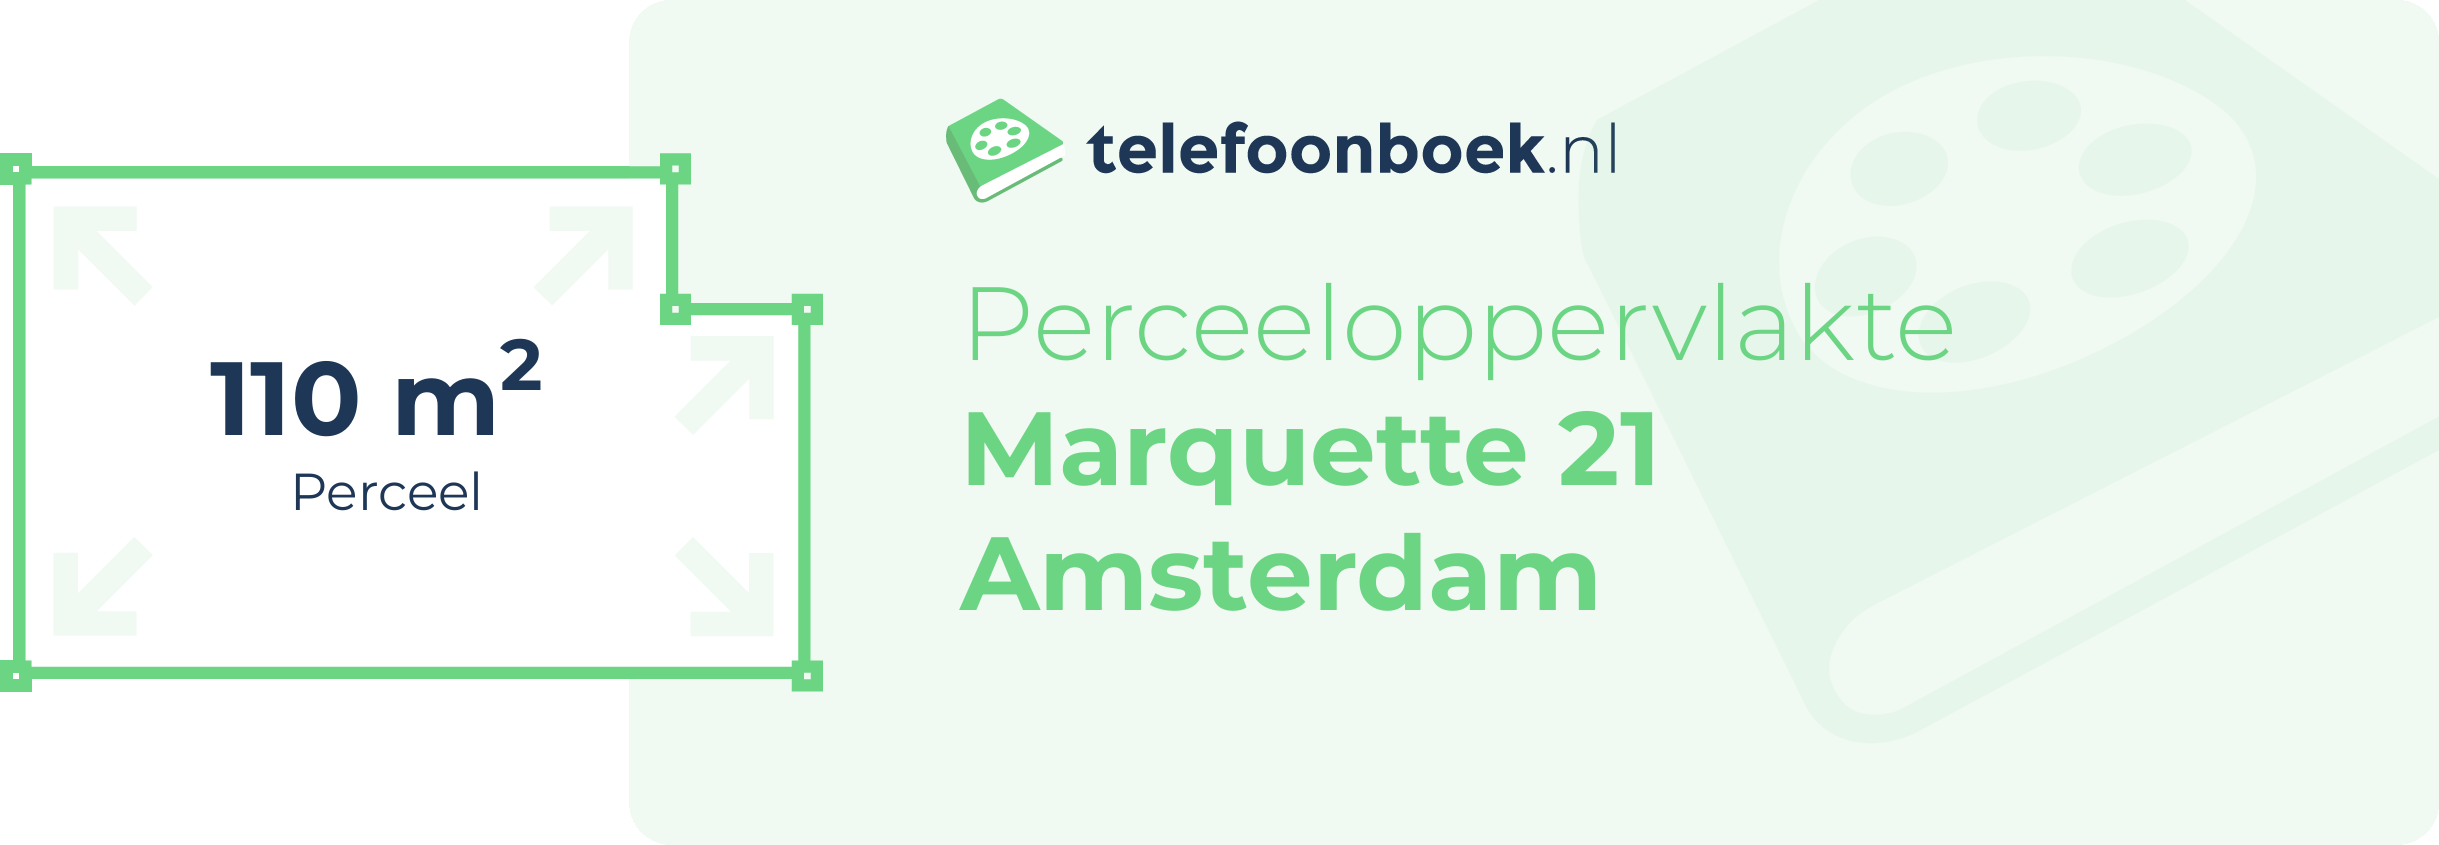 Perceeloppervlakte Marquette 21 Amsterdam